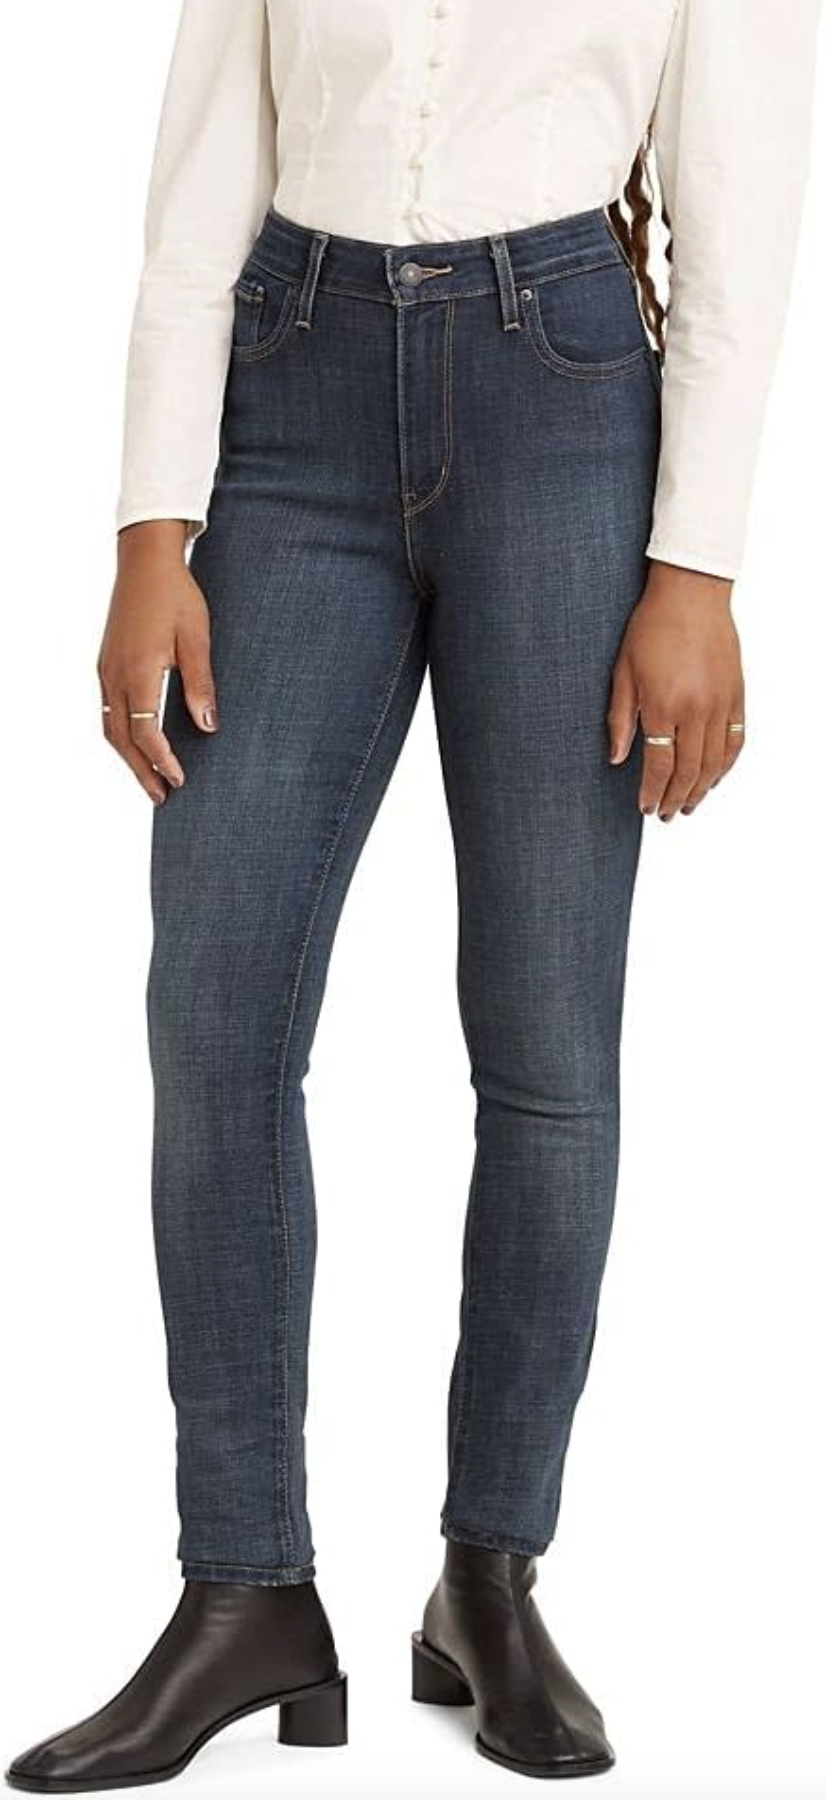 Levi's Women's 721 High Rise Skinny Jeans deals